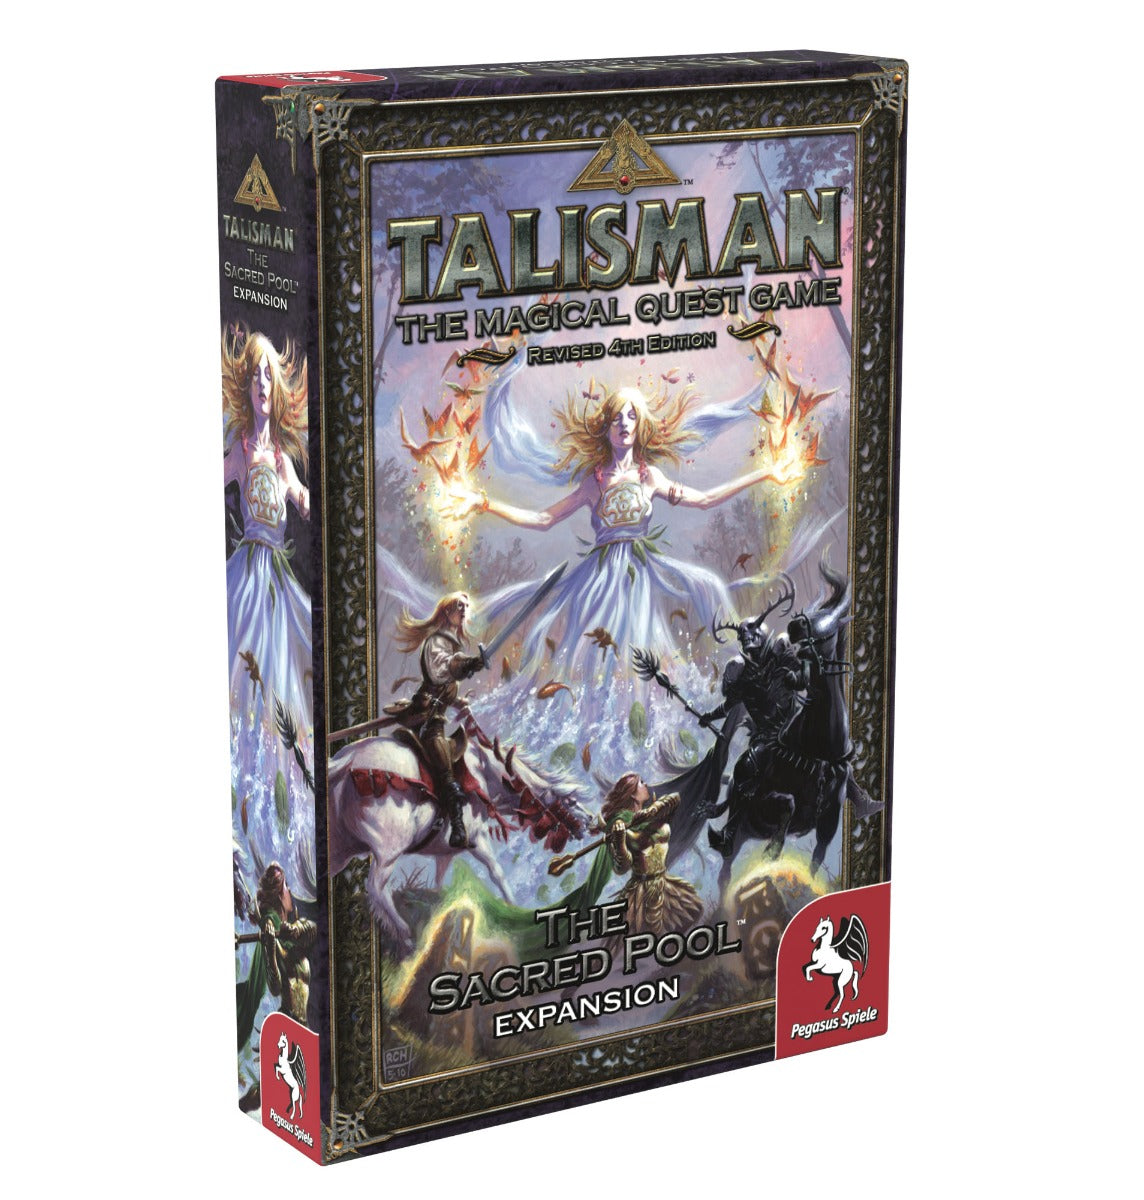 Talisman, The Magical Quest Game, 4th edition, adventure, brætspil, udvidelse, expansion, the sacred pool, Pegasus spiele